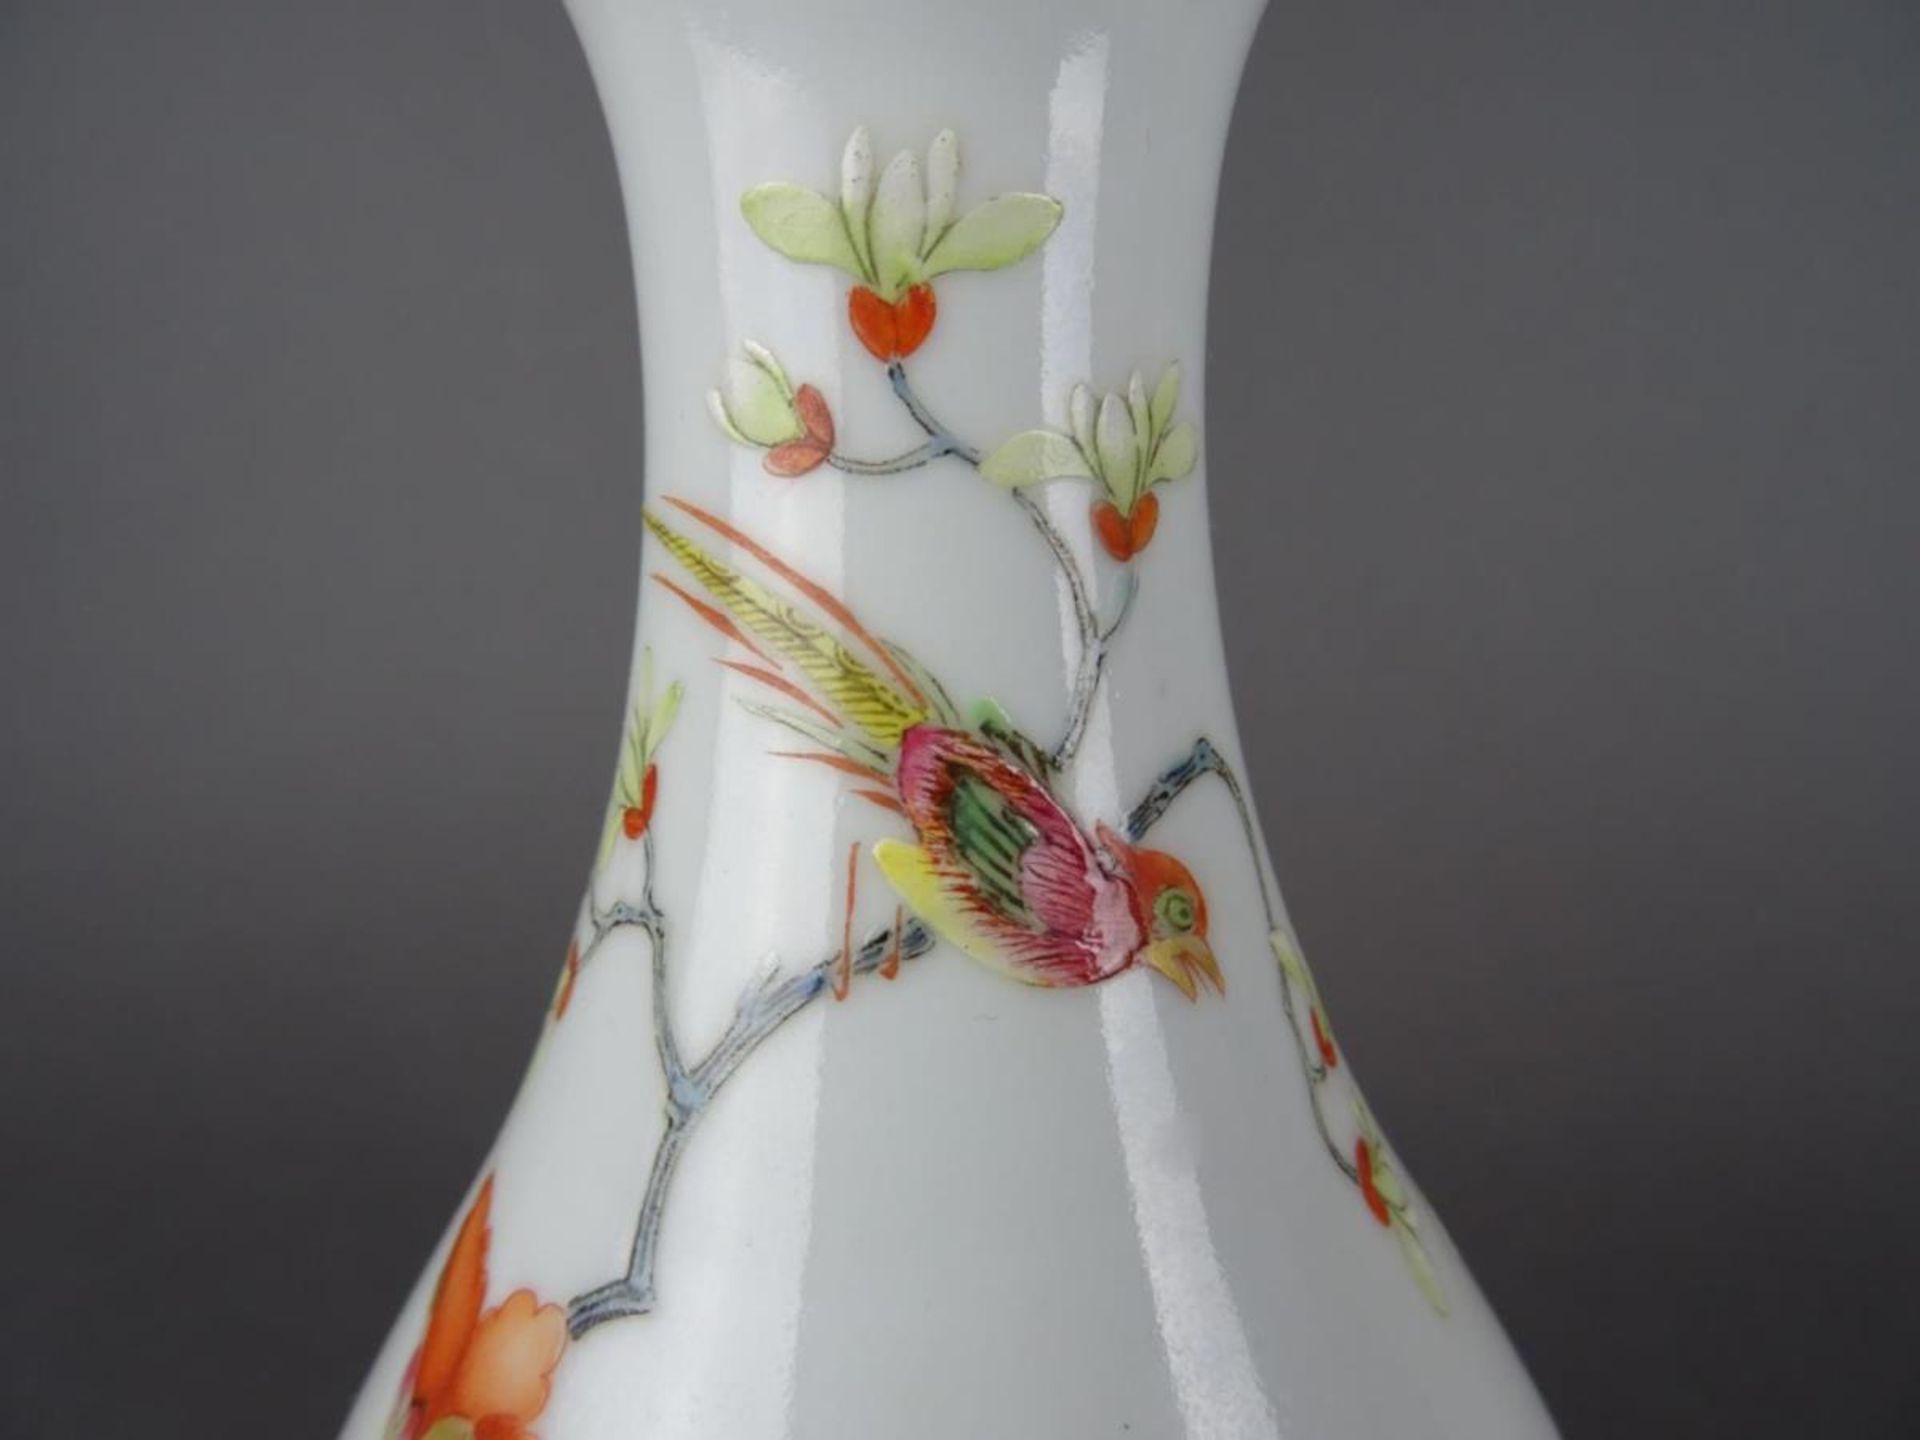 Chinese porcelain Famille rose vase - flowers - Image 4 of 7